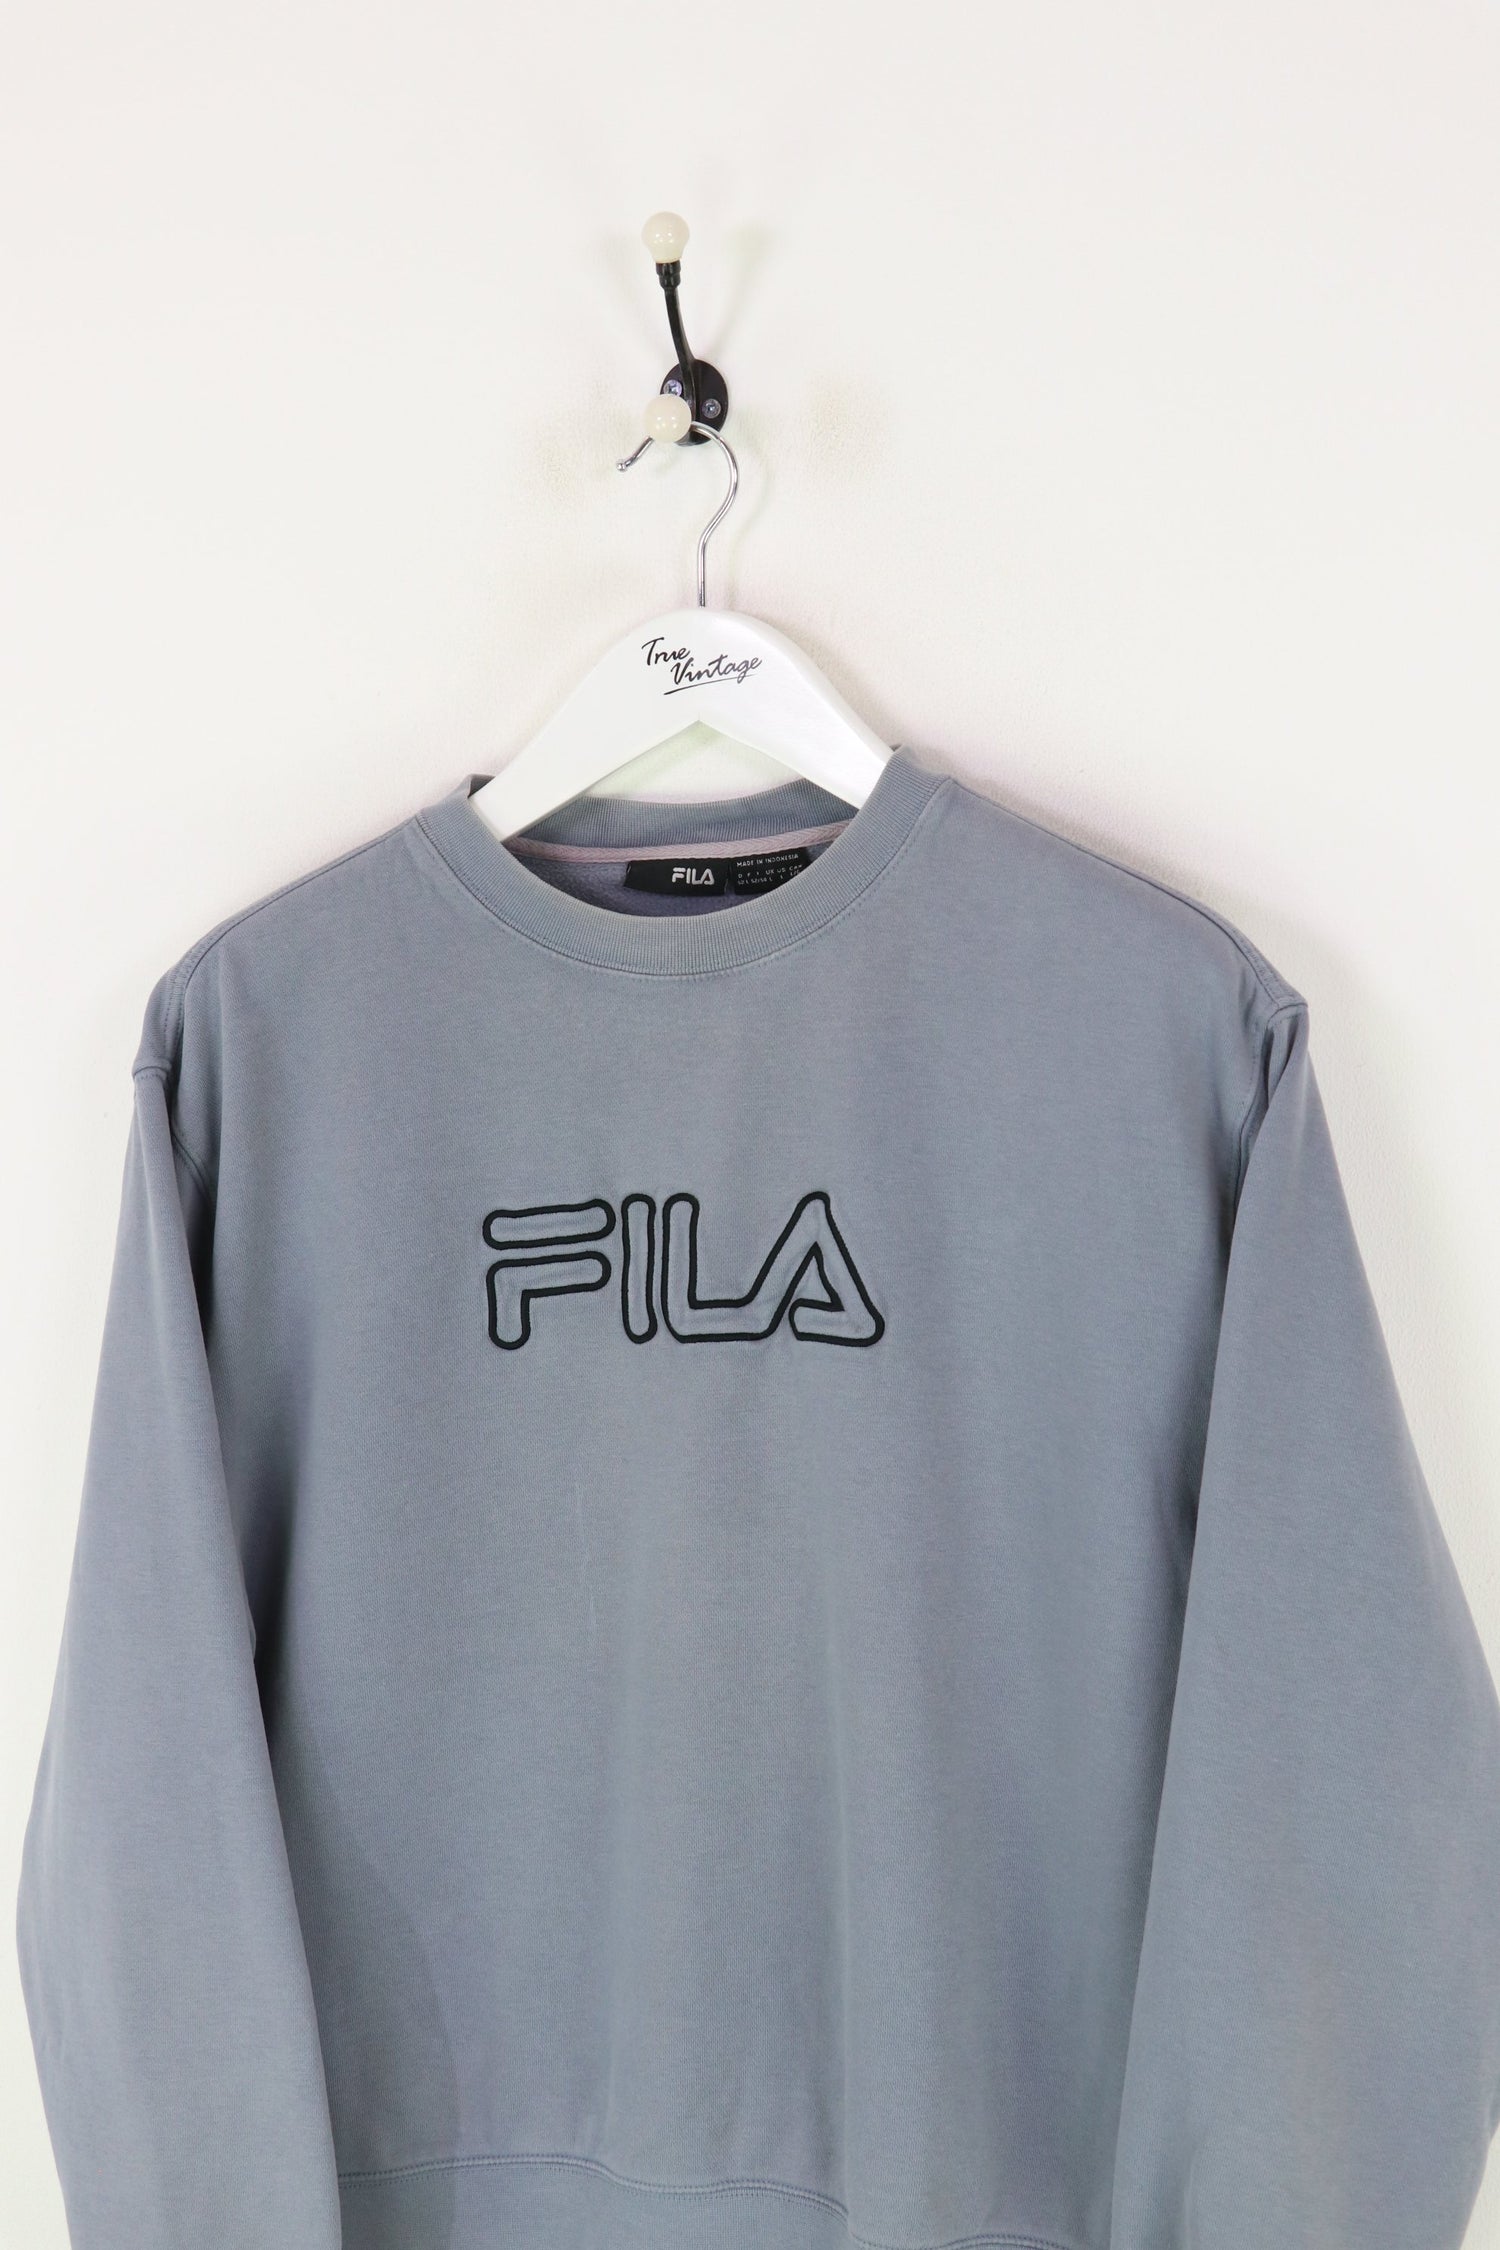 Fila Sweatshirt Grey XS